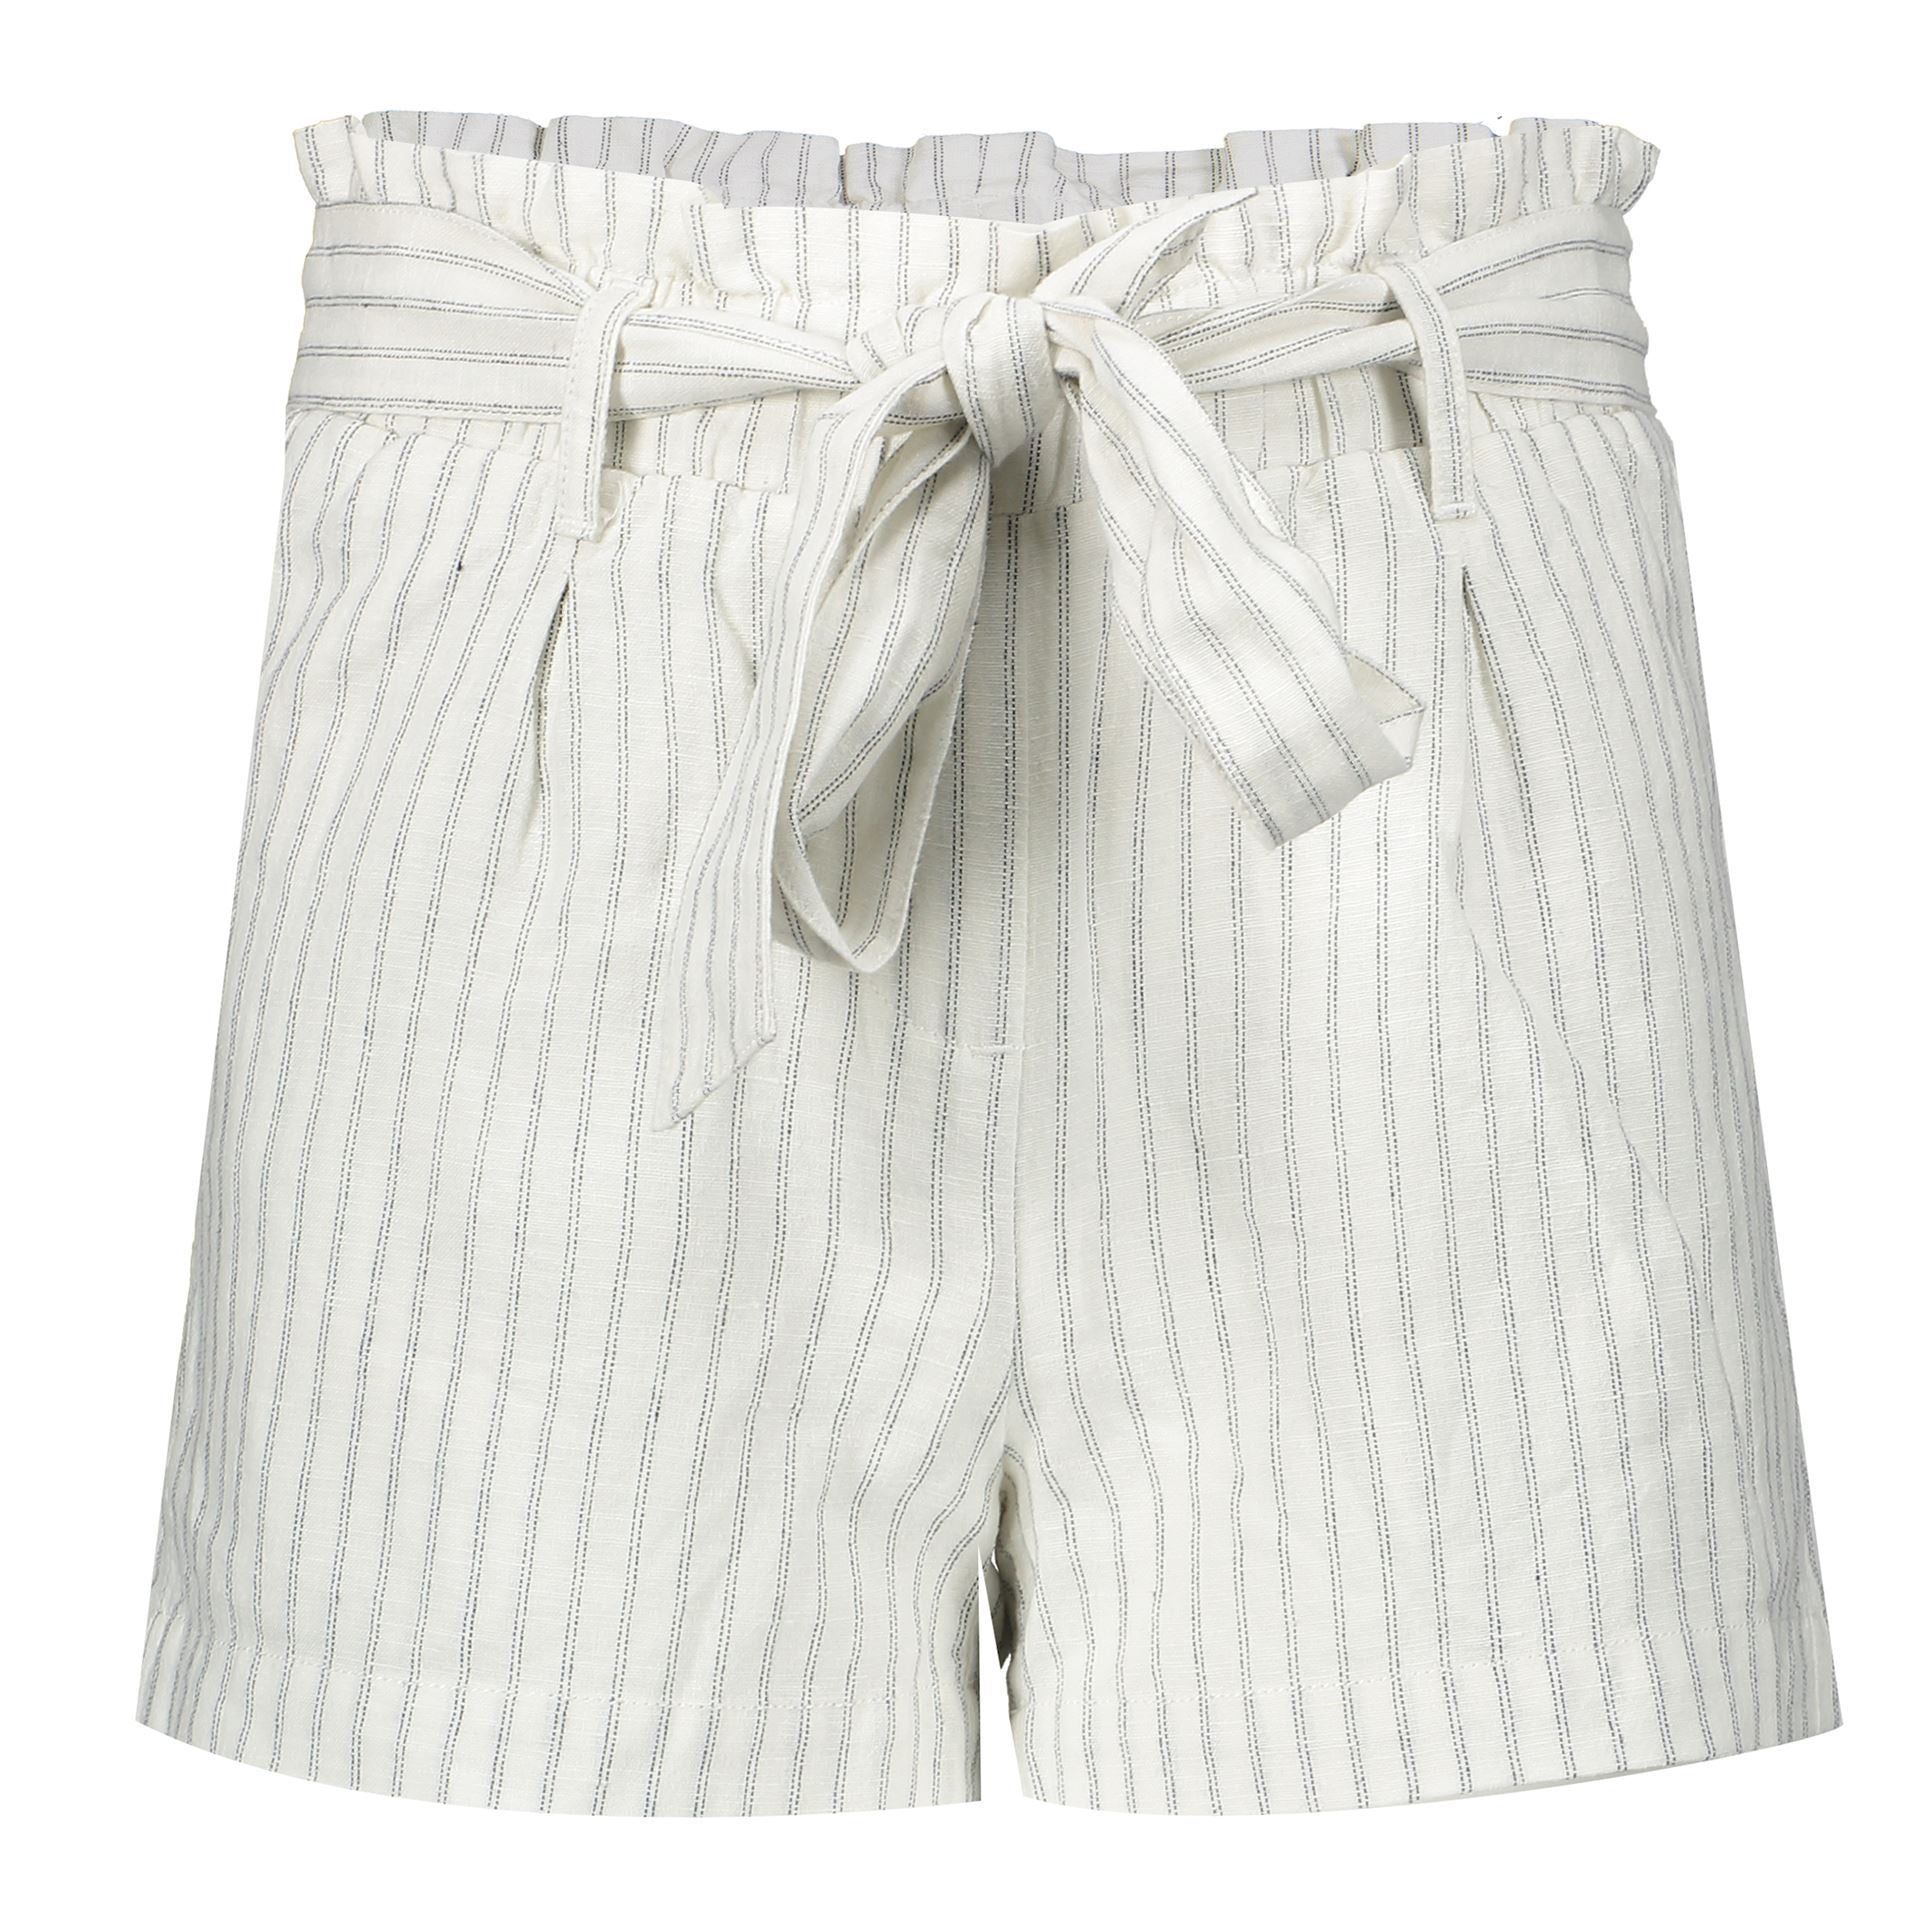 Meisjes Shorts Striped With Strap van Geisha in de kleur Off-White/Black in maat 176.